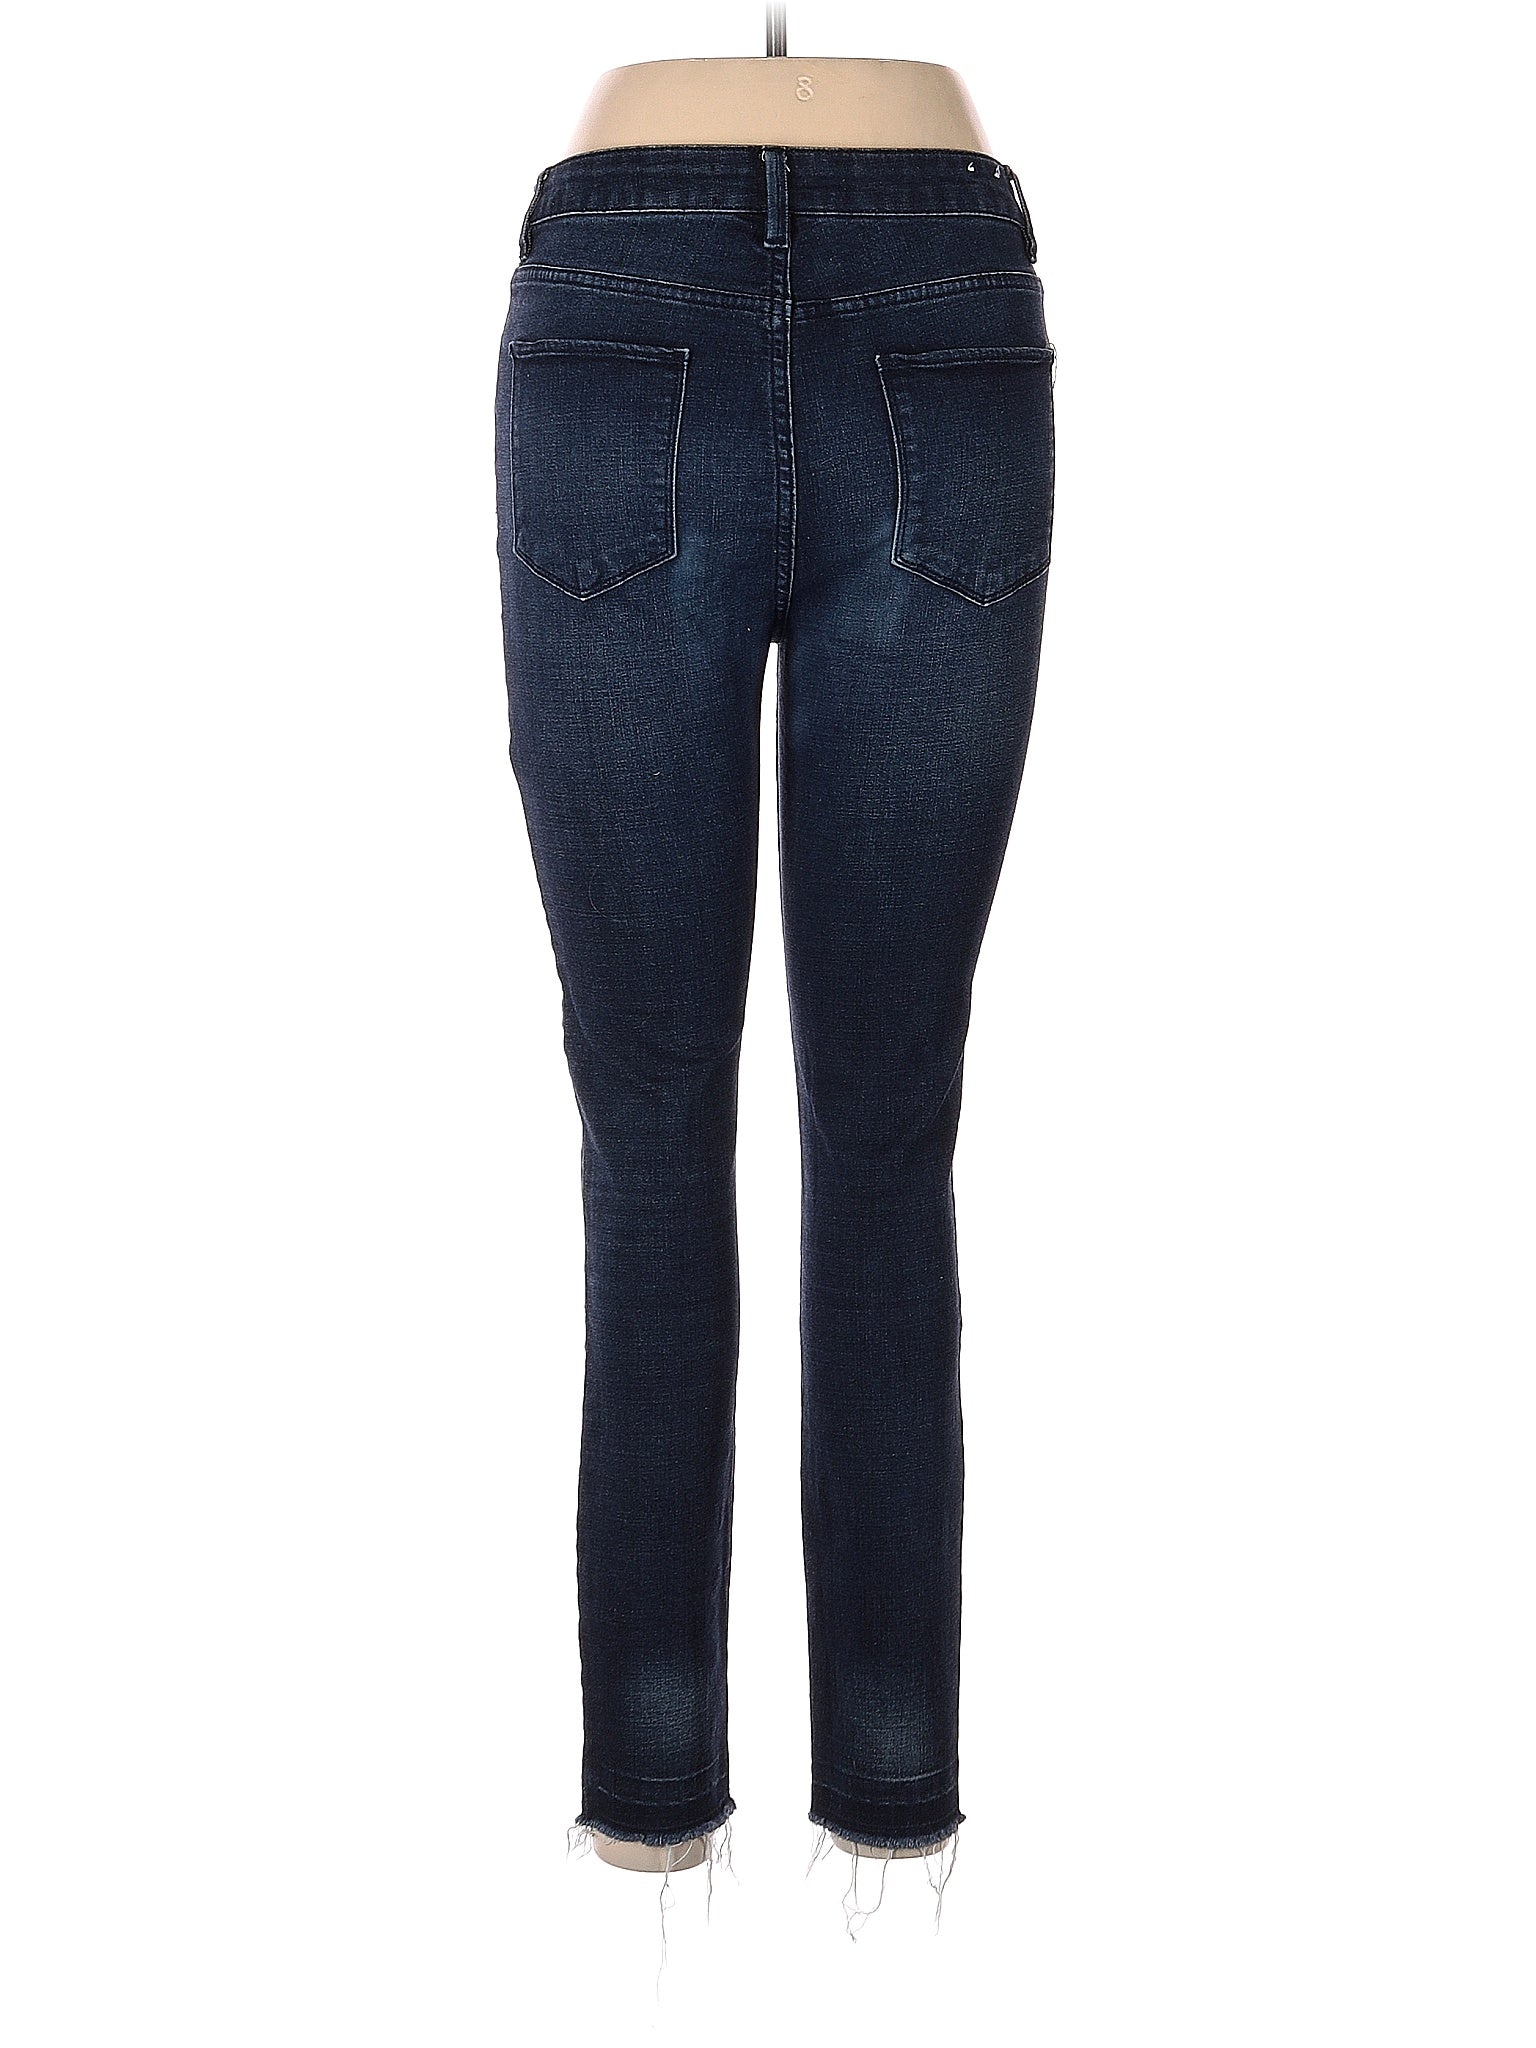 Jeans waist size - 29